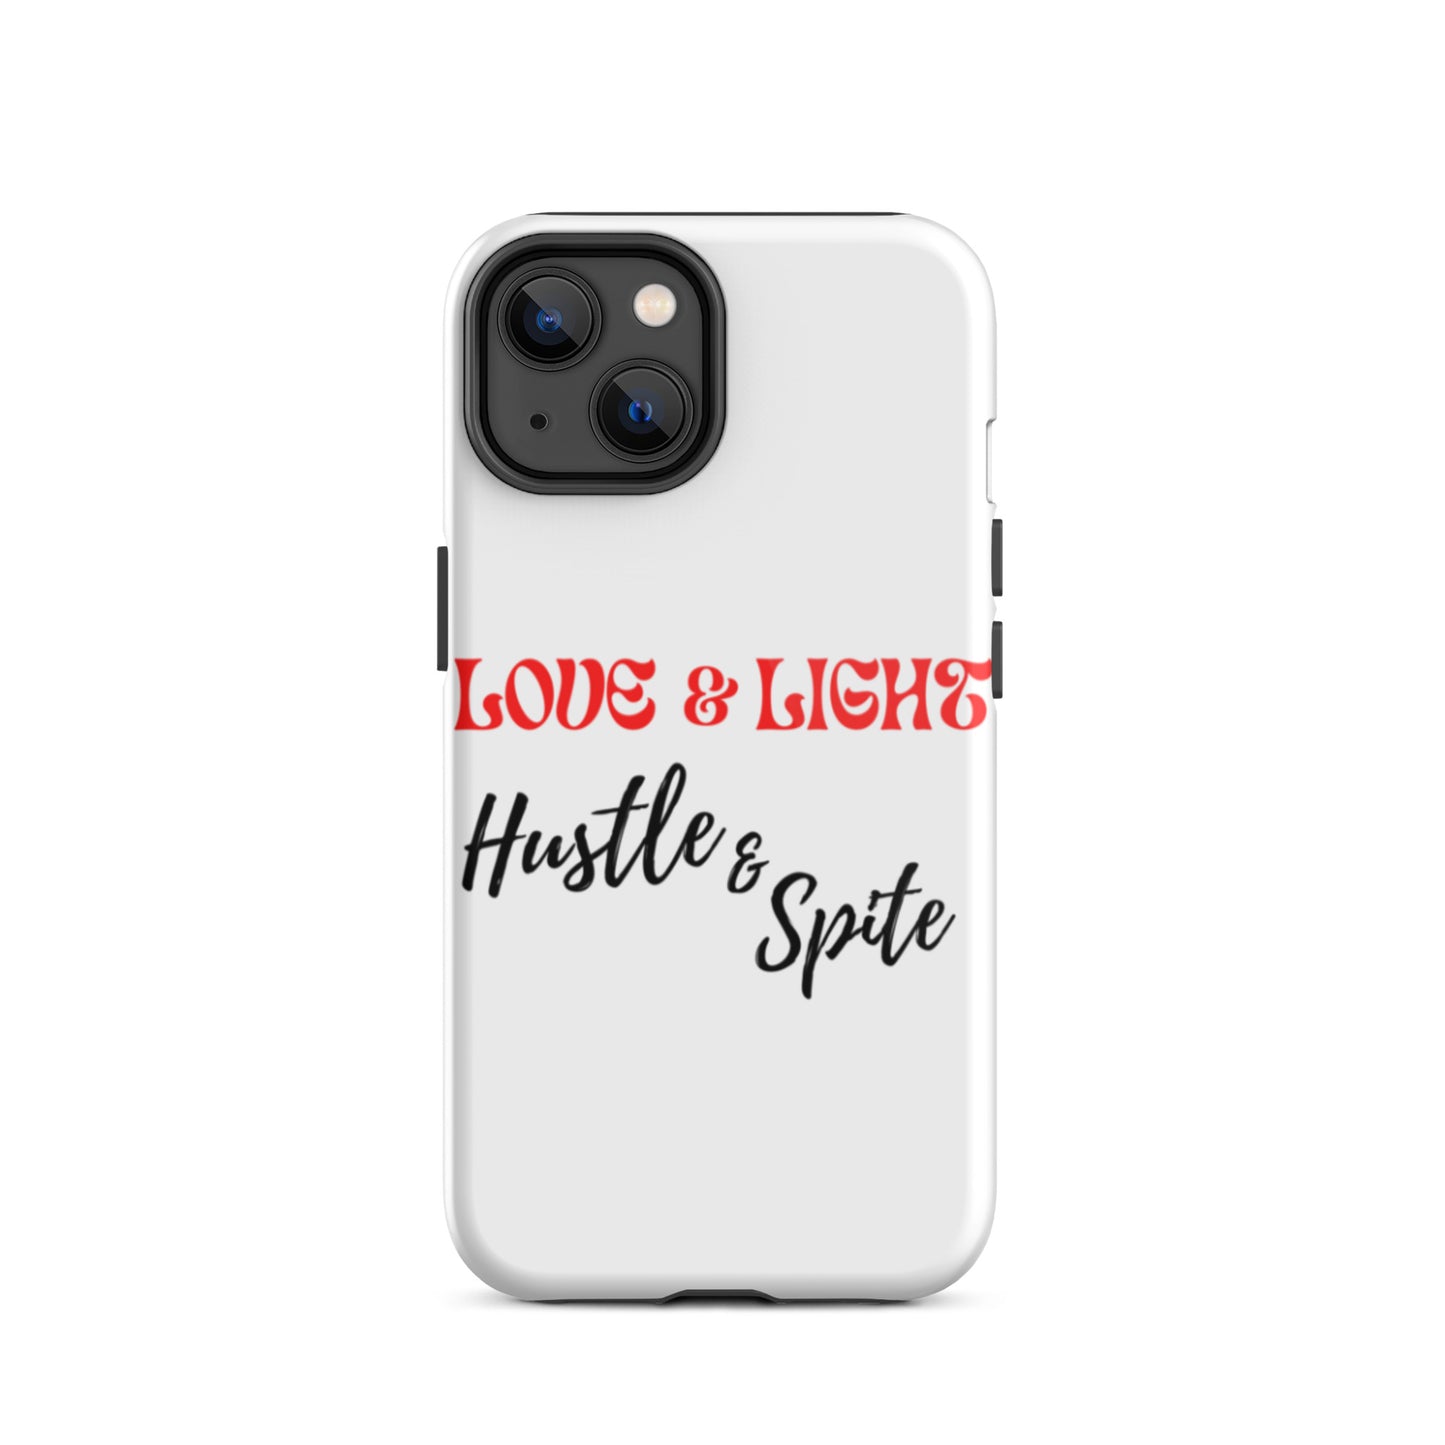 Love & Light Hustle & Spite iPhone Case